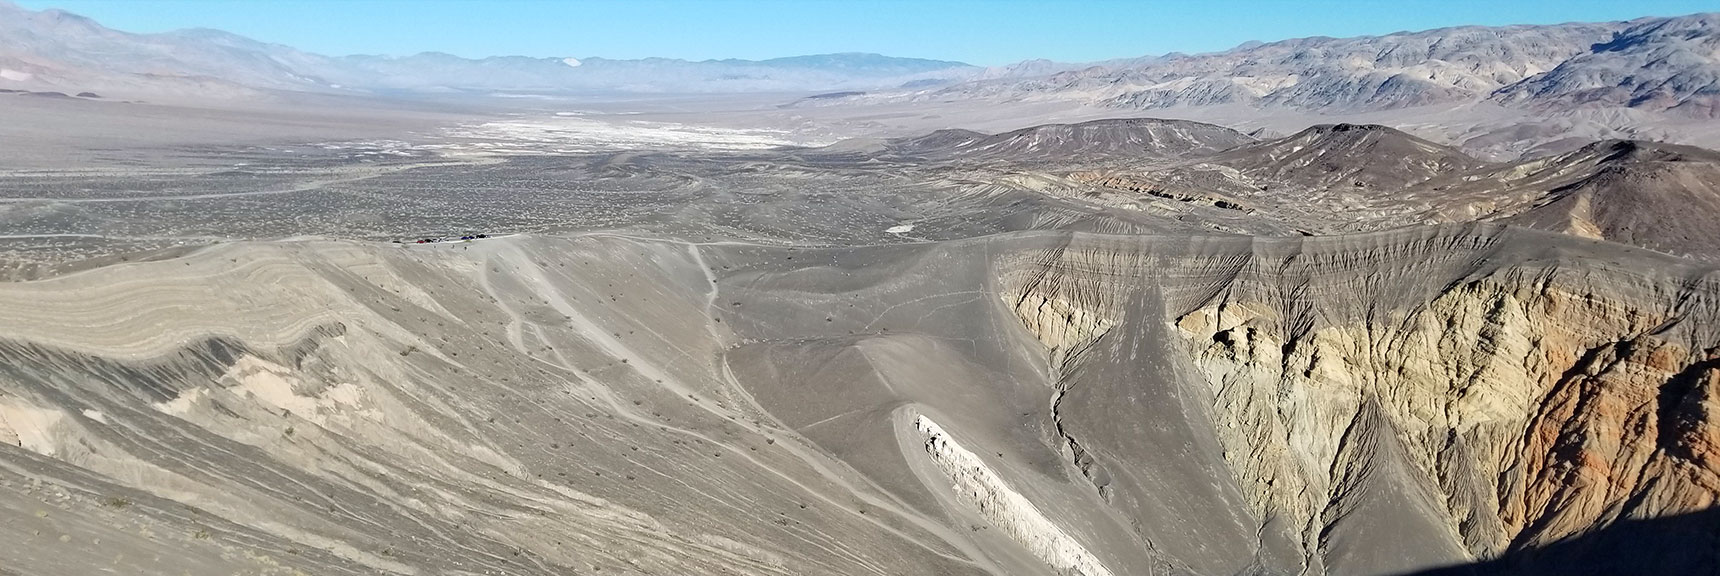 Death Valley National Park Ubehebe Crater November 24th 2018